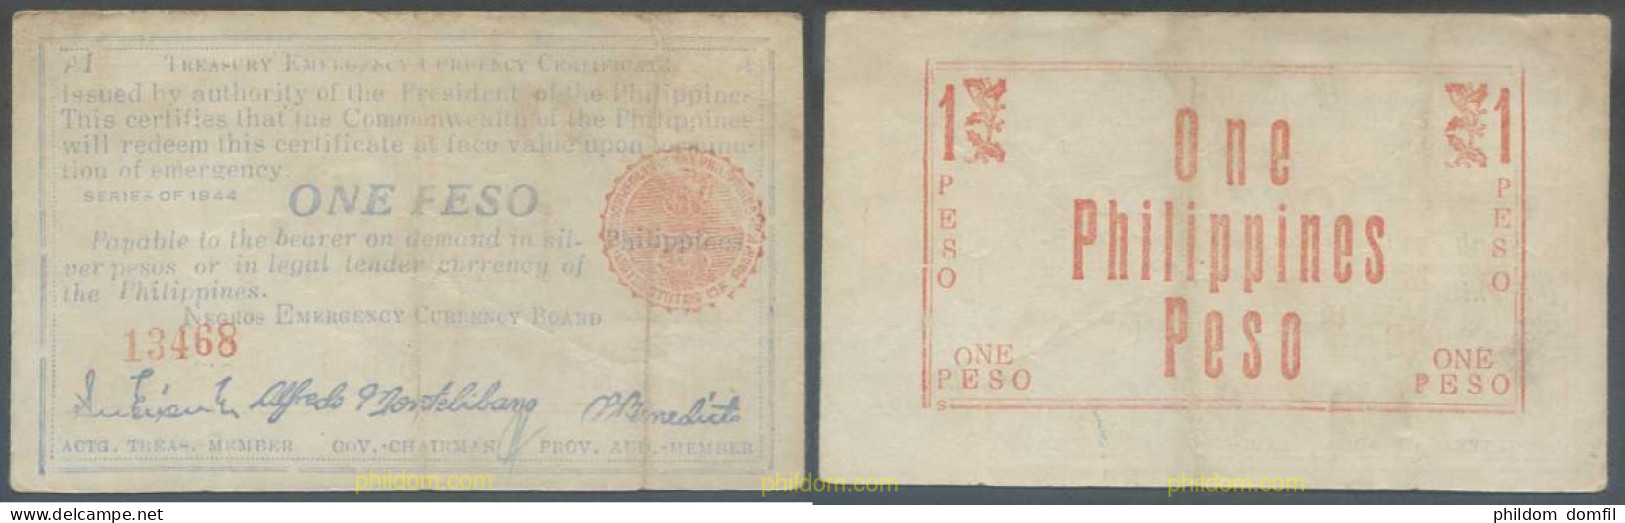 5894 FILIPINAS 1944 PHILIPPINES 1 PESO 1944 - Philippines